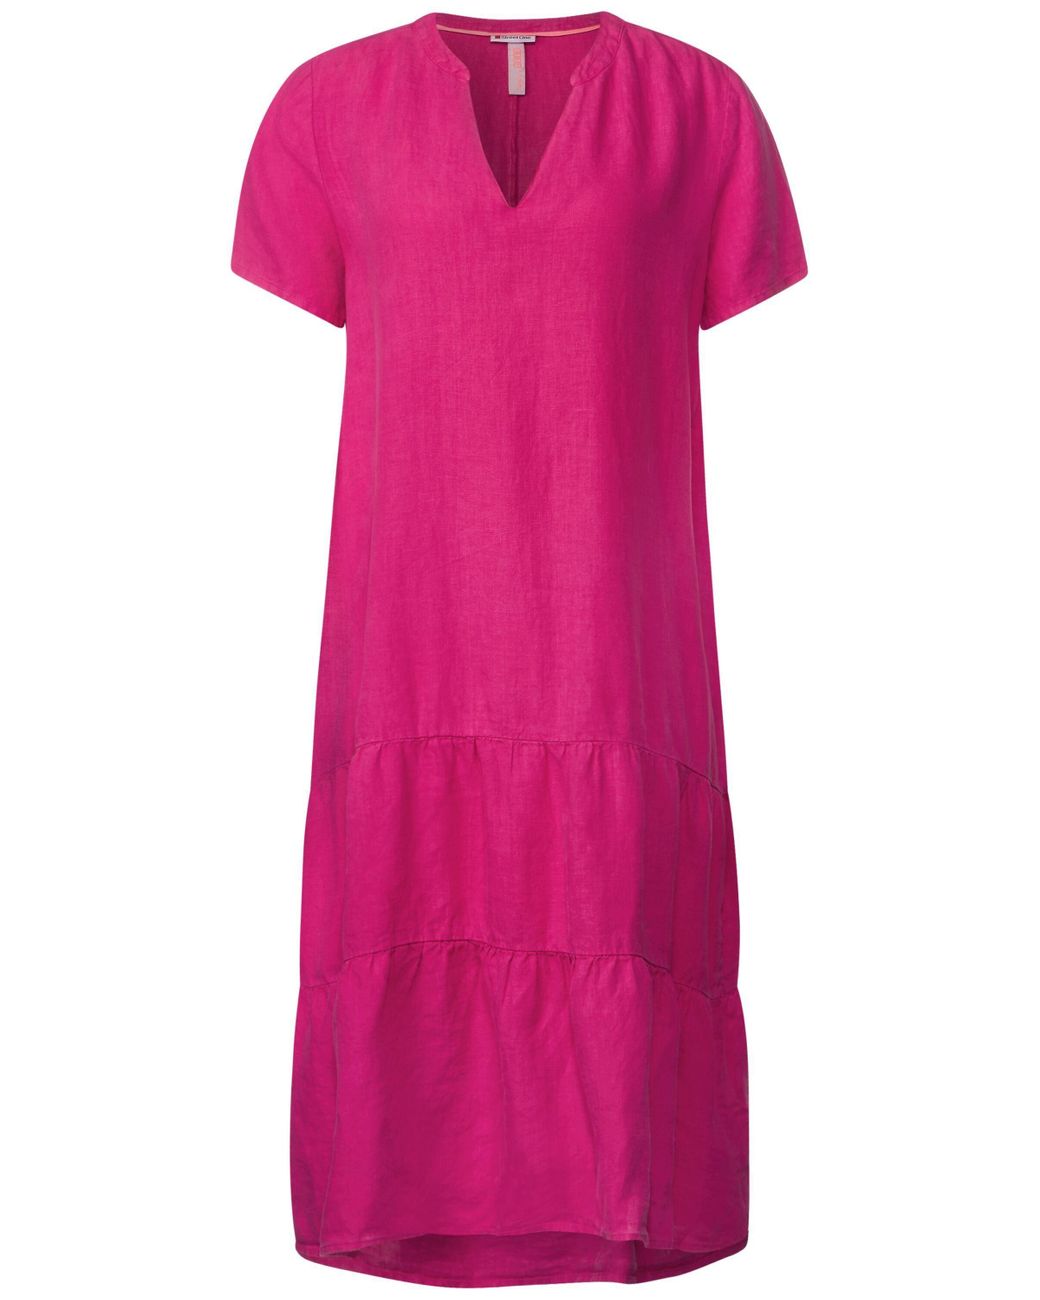 Lyst Street Sommerkleid Pink One | in DE